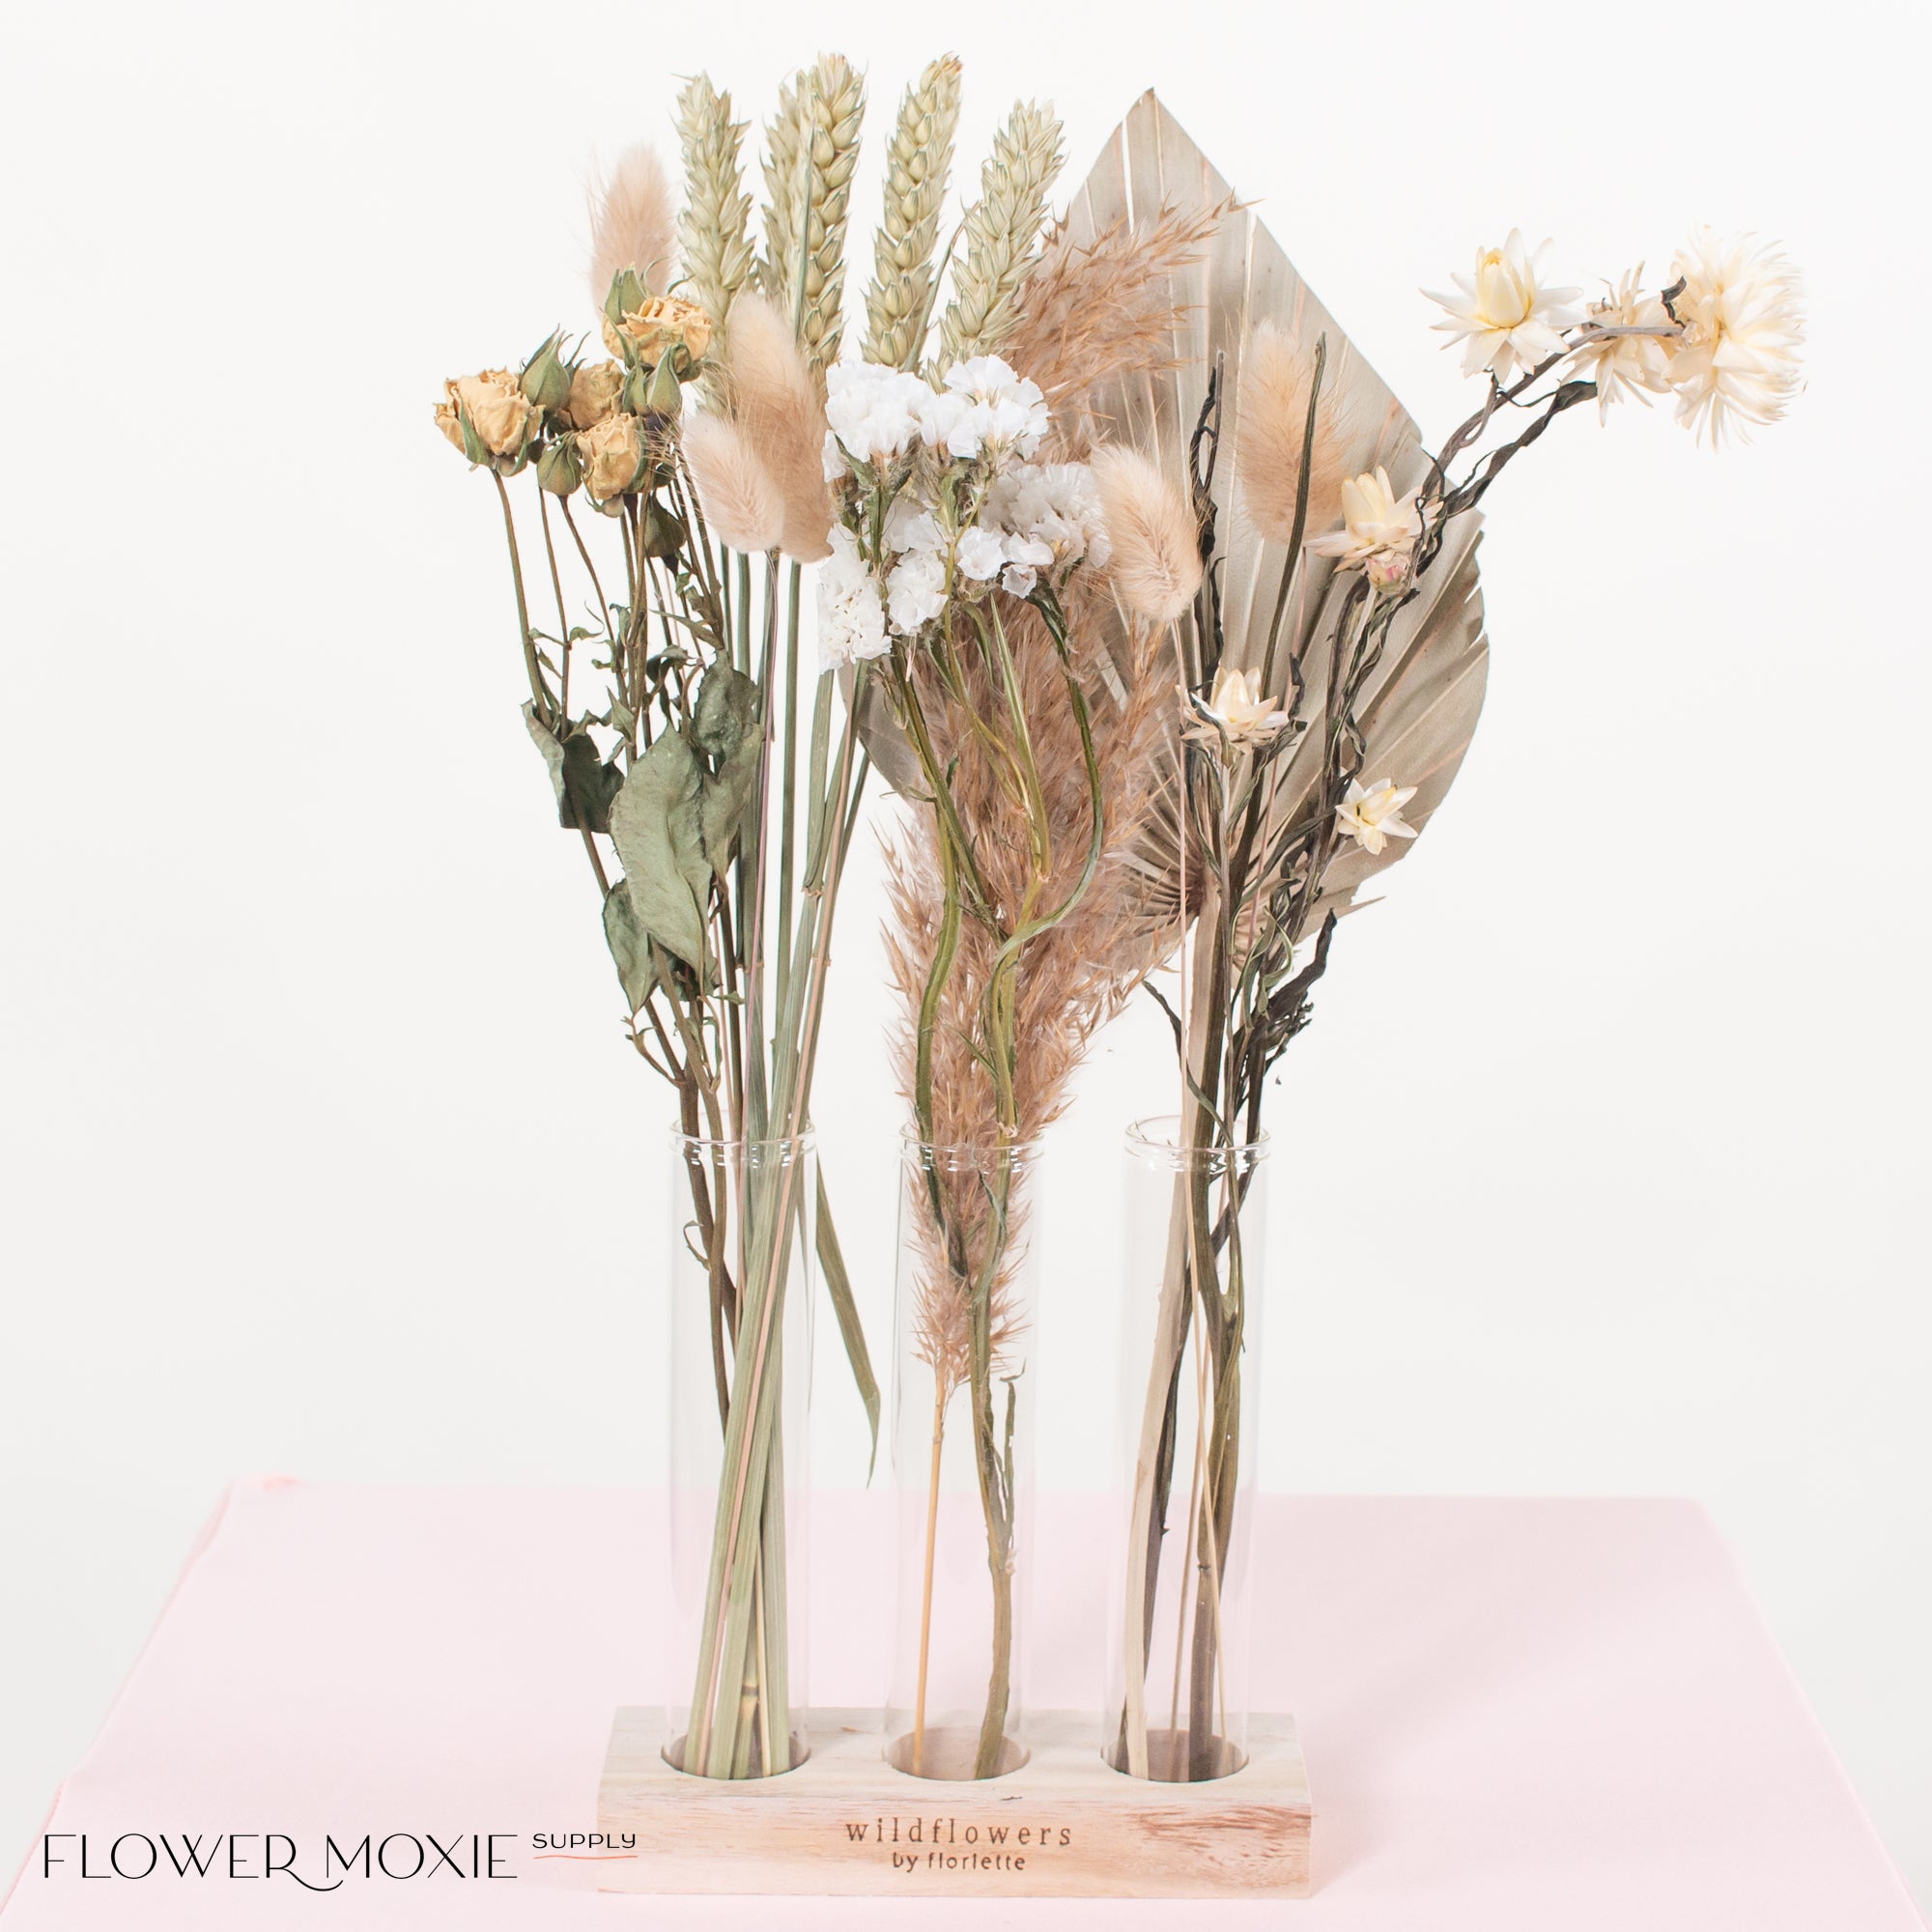 Dried & Preserved Flowers- DIY Bundles - Dried Flowers Forever